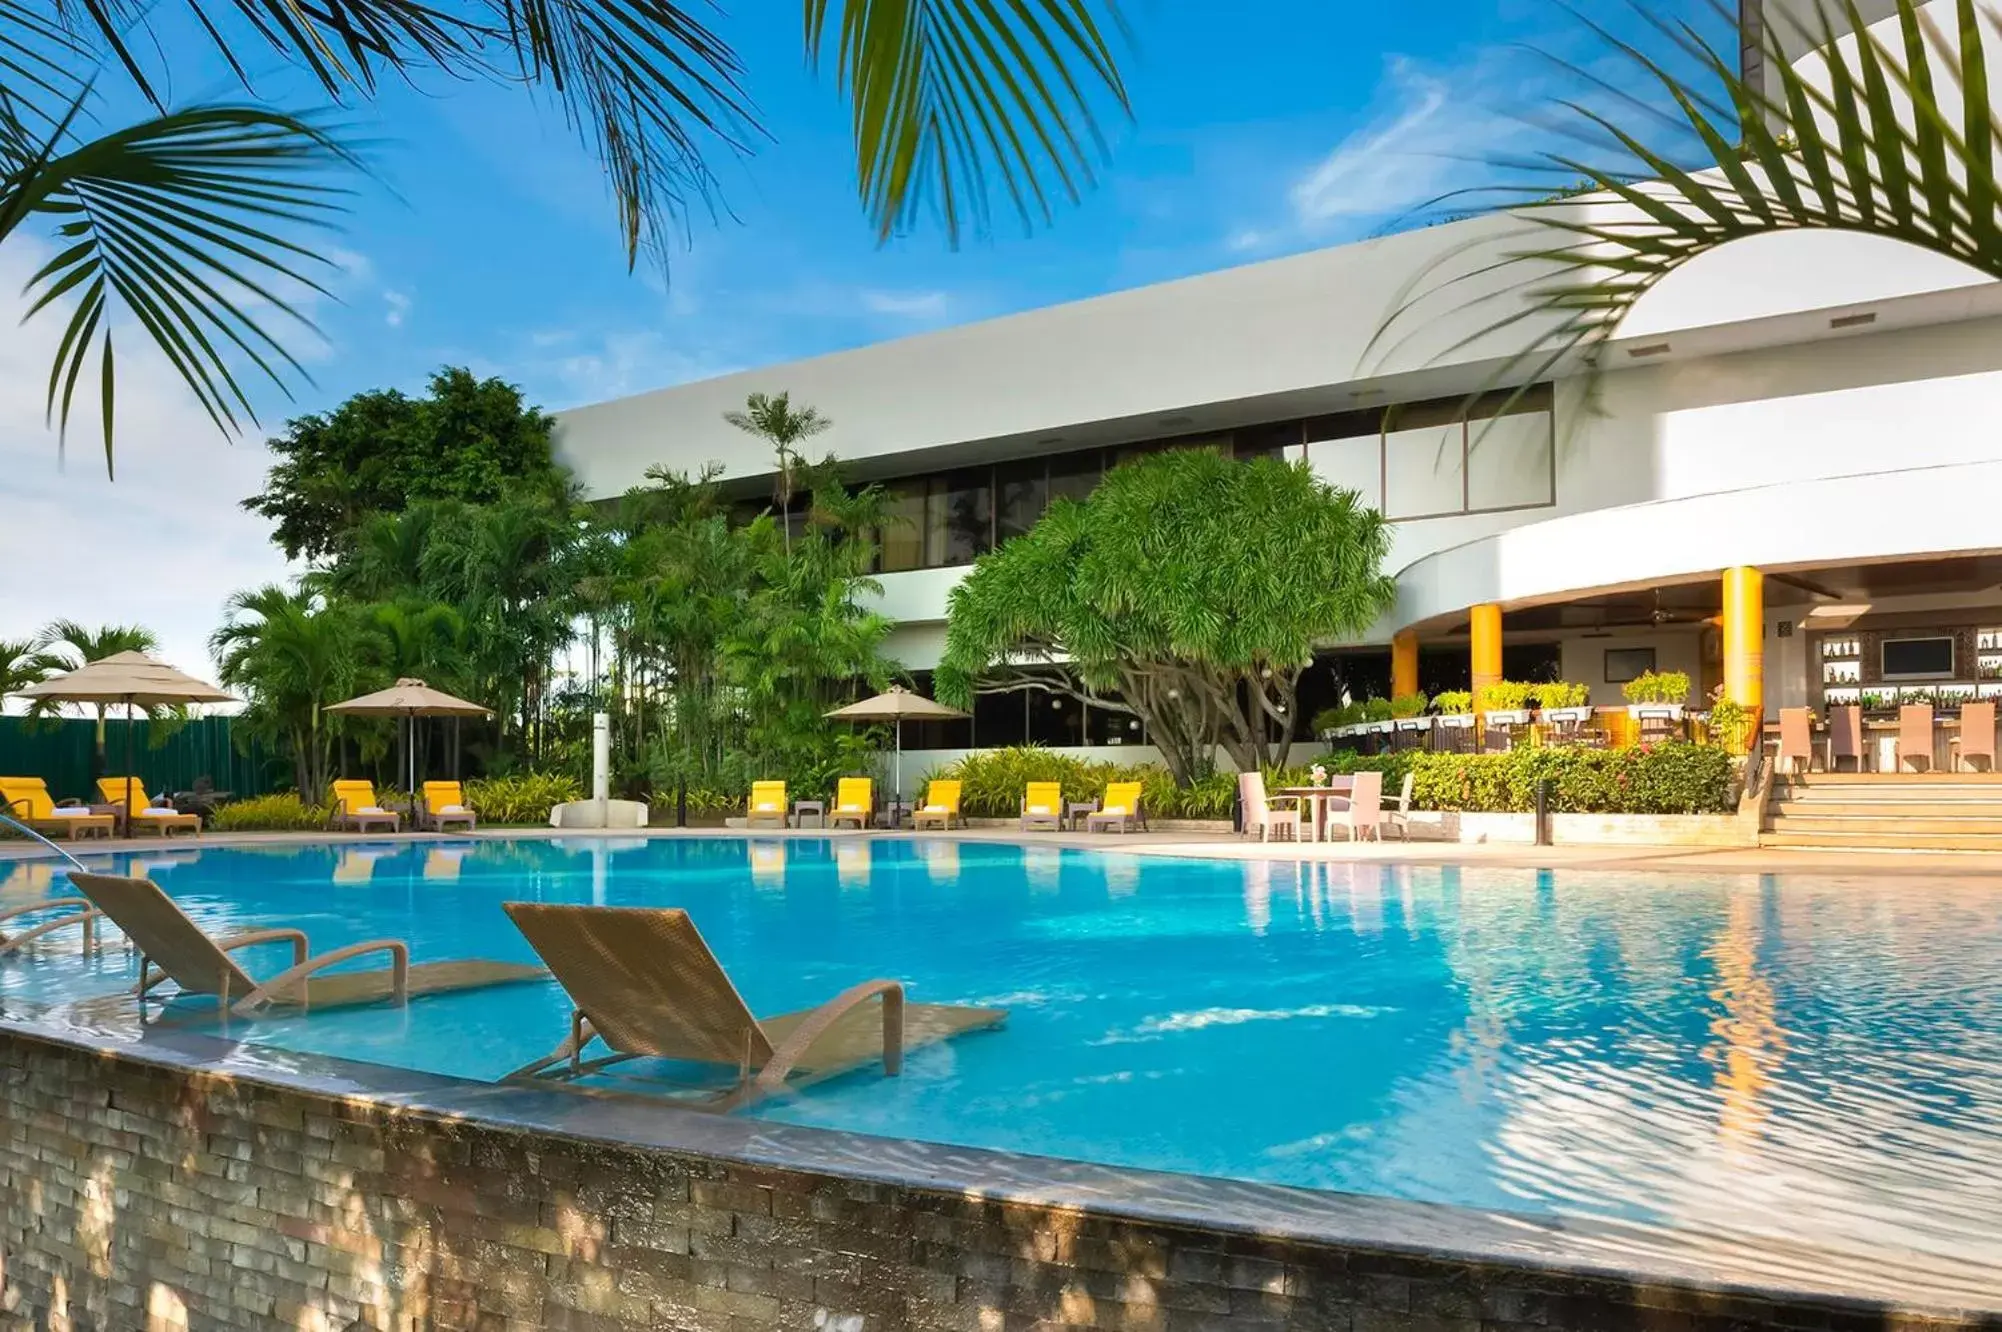 Swimming Pool in Marco Polo Plaza Cebu